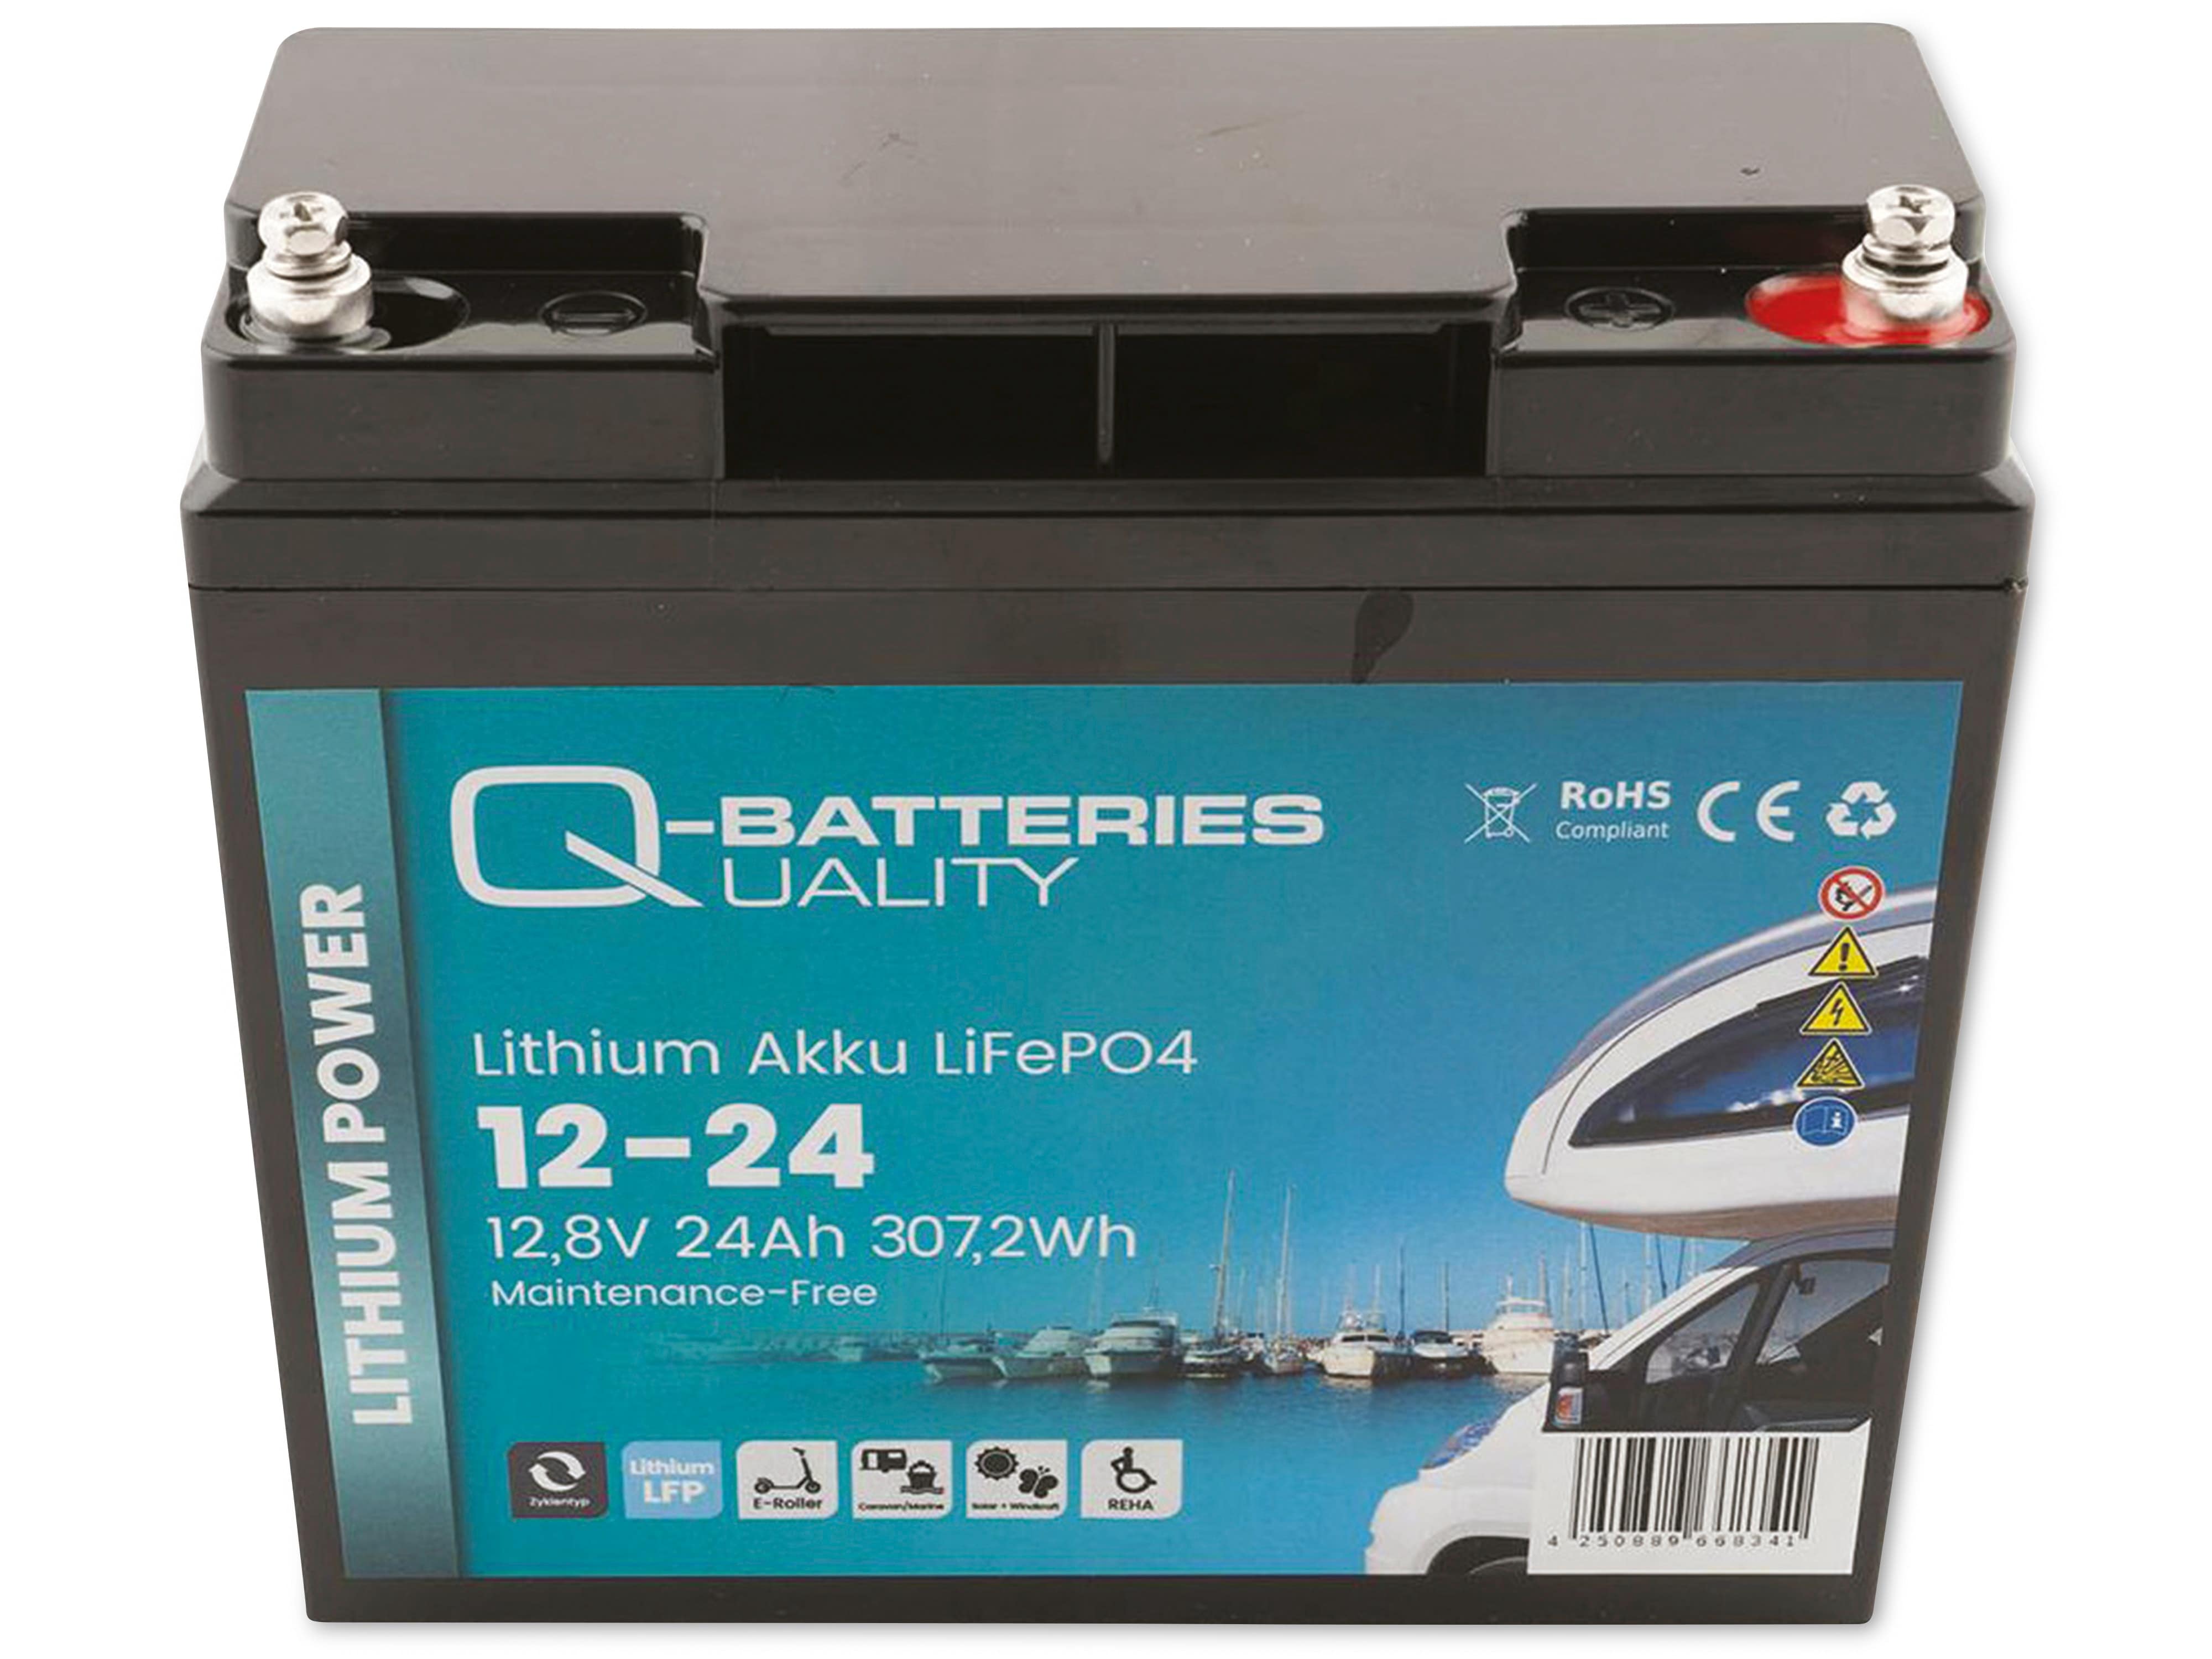 Q-BATTERIES Lithium Akku 12-24 12,8V, 24Ah 307,2Wh, LiFePO4 Batterie